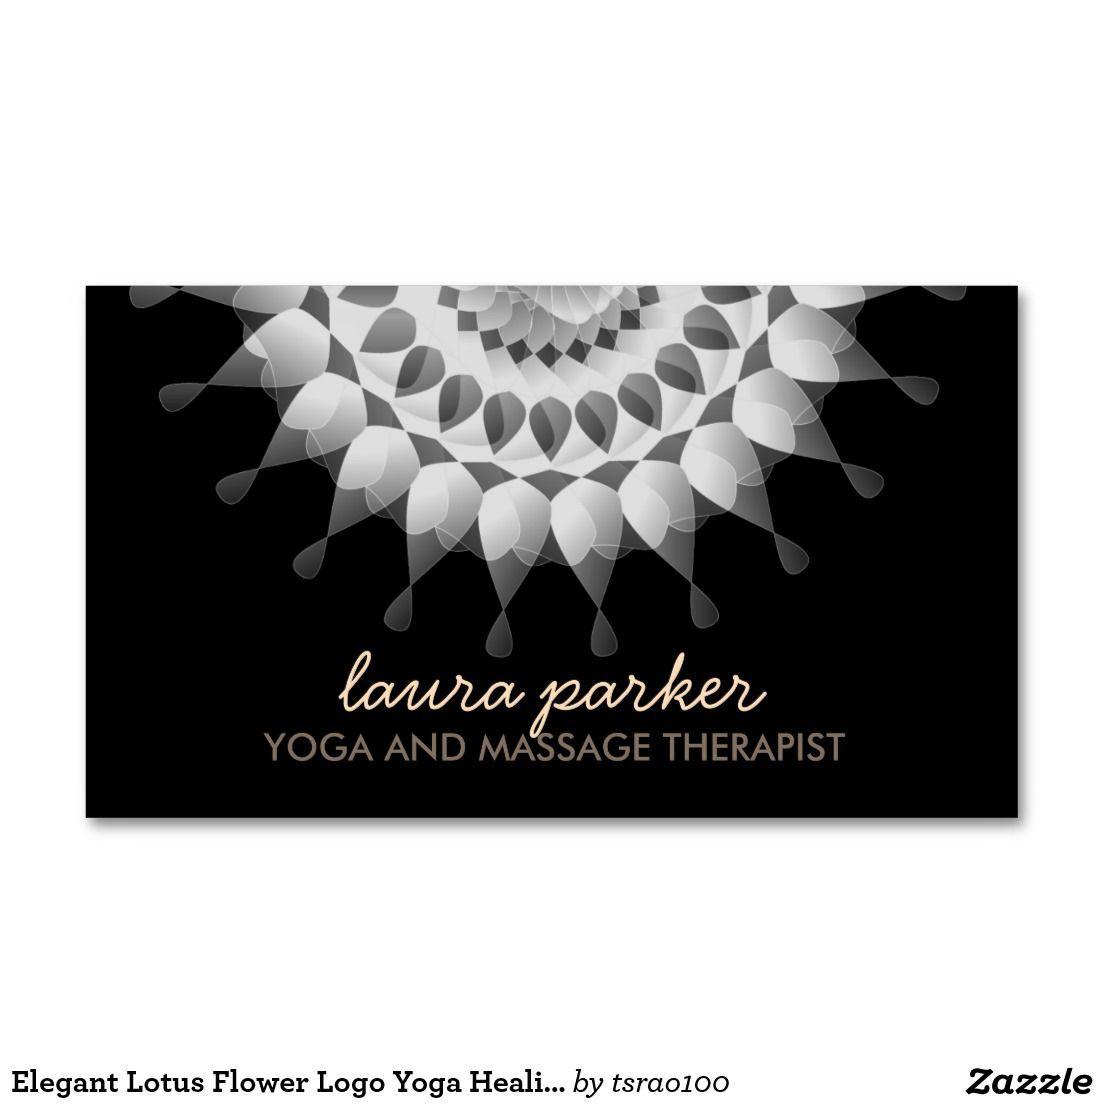 Triangle Lotus Flower Logo - Elegant Lotus Flower Logo Yoga Healing Health Business Card ...